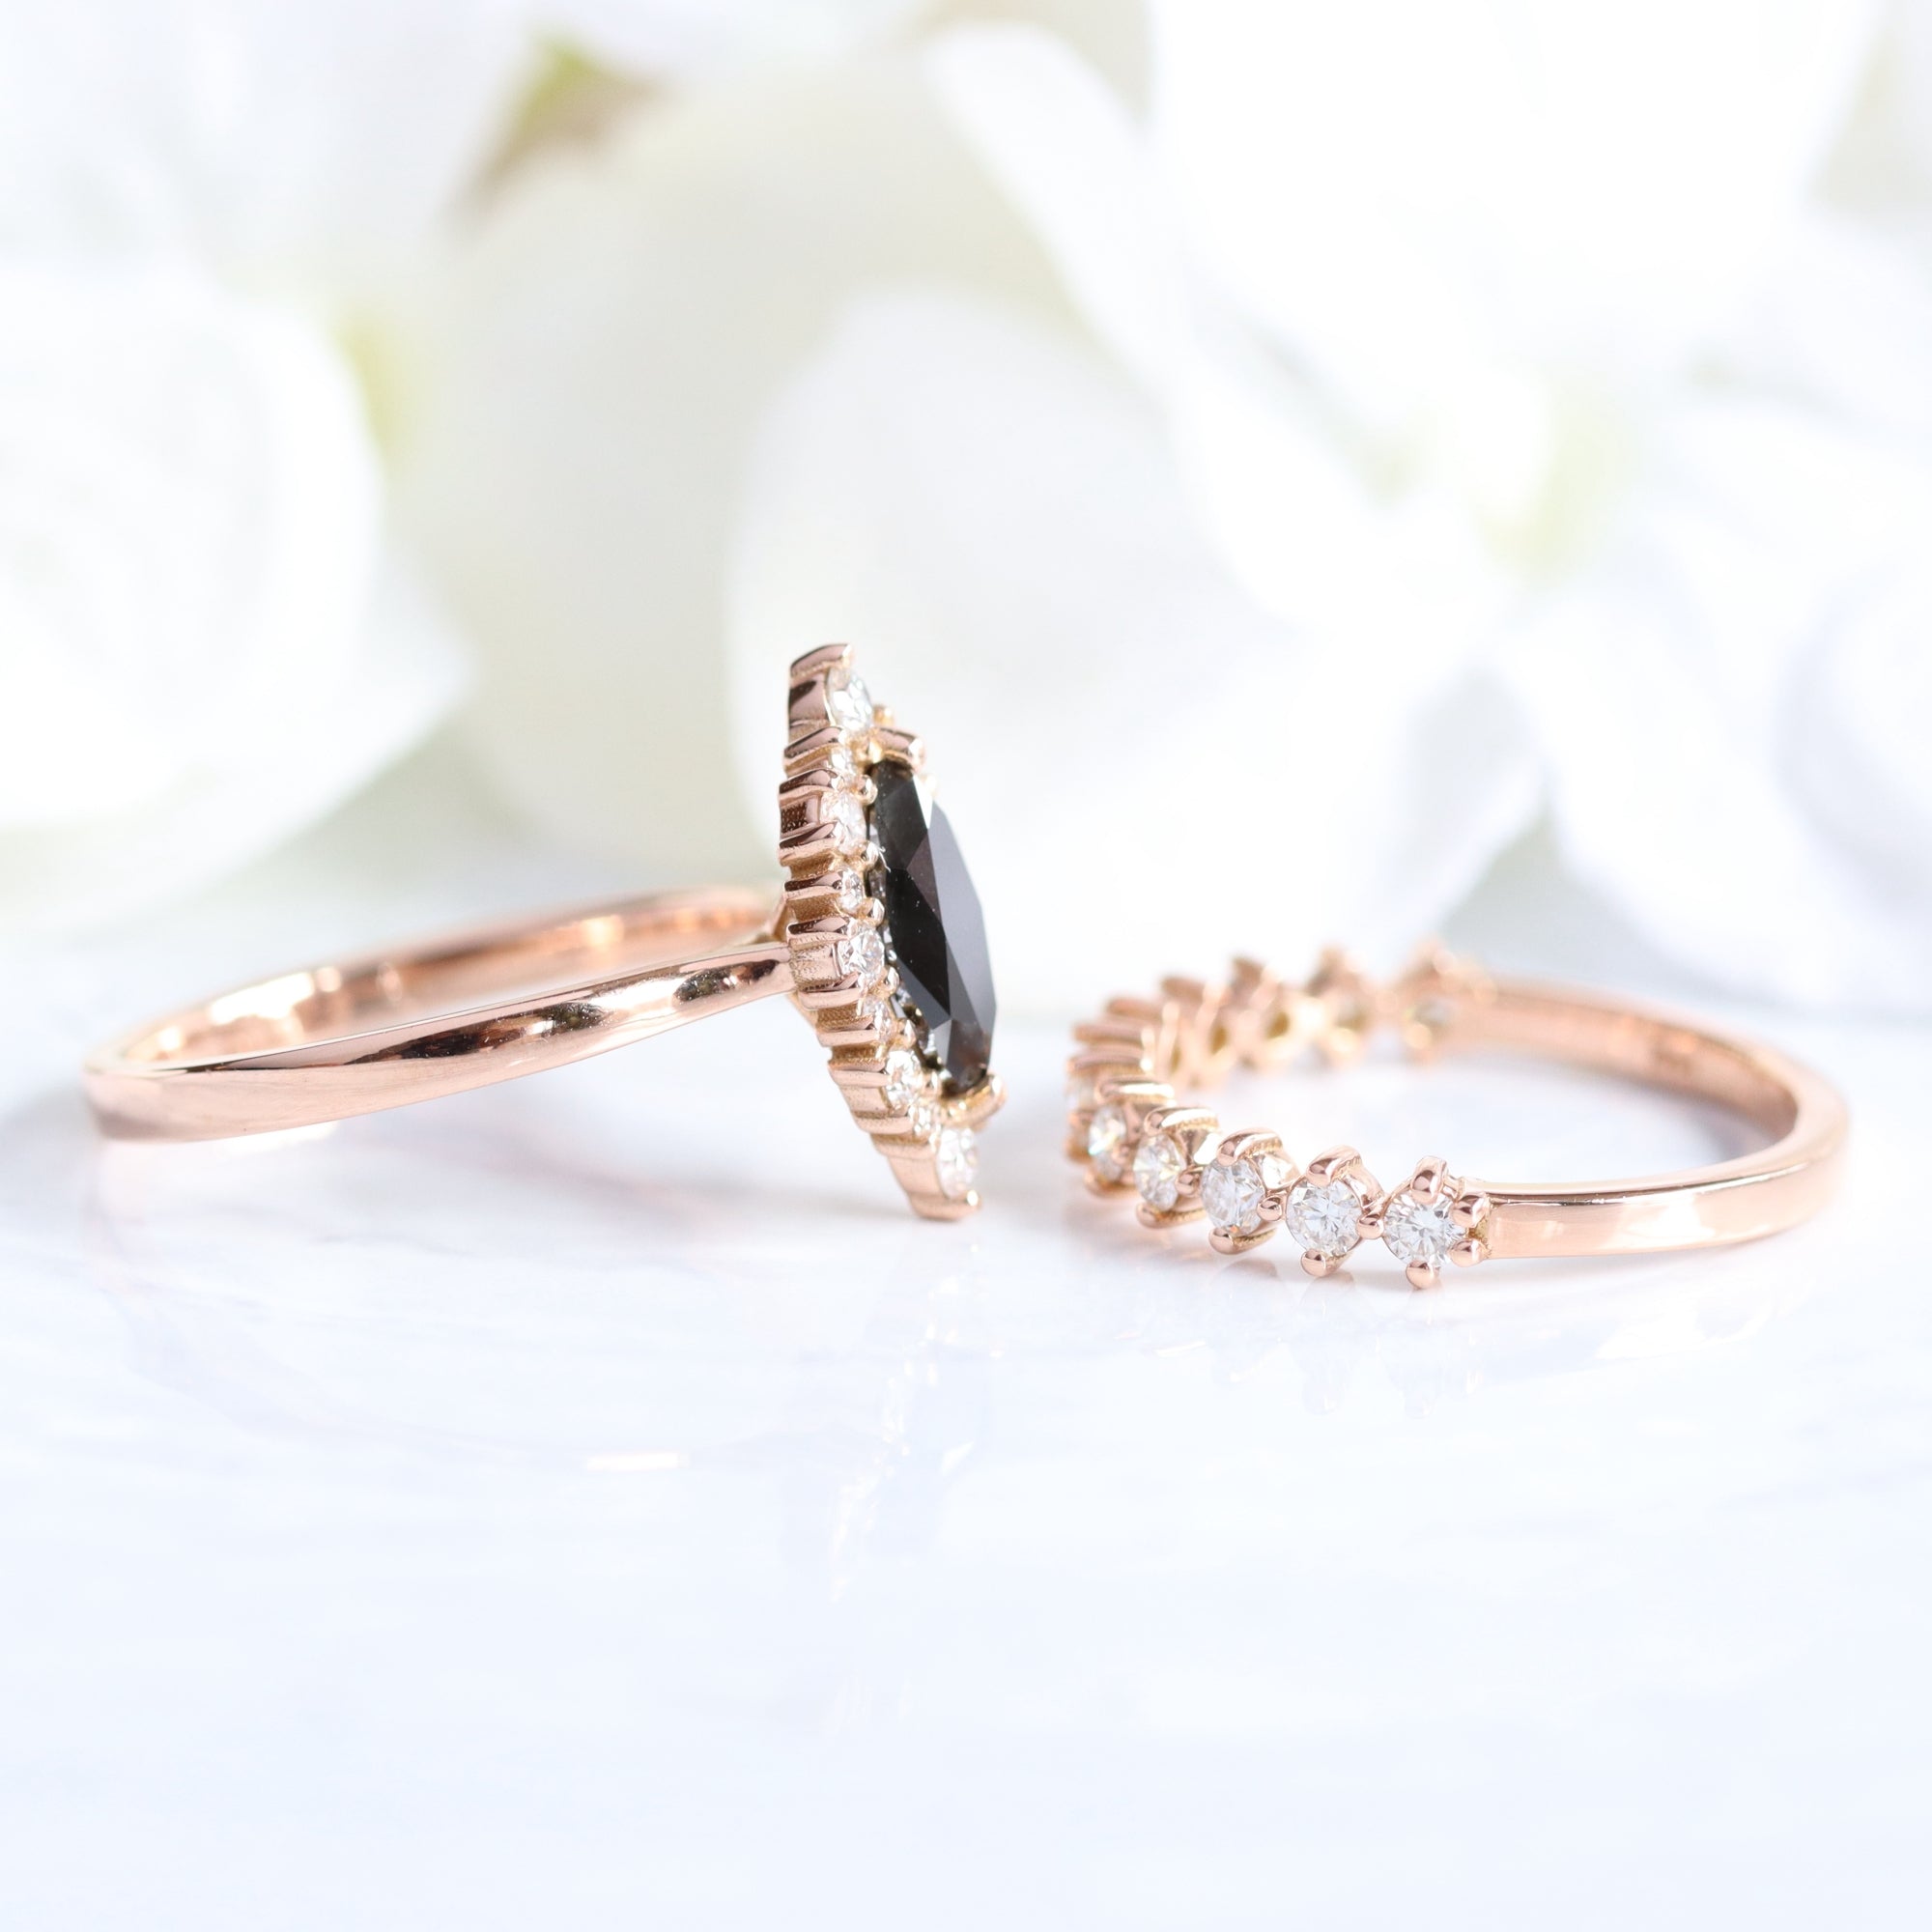 Unique marquise black diamond ring bridal set rose gold halo diamond engagement ring stack la more design jewelry